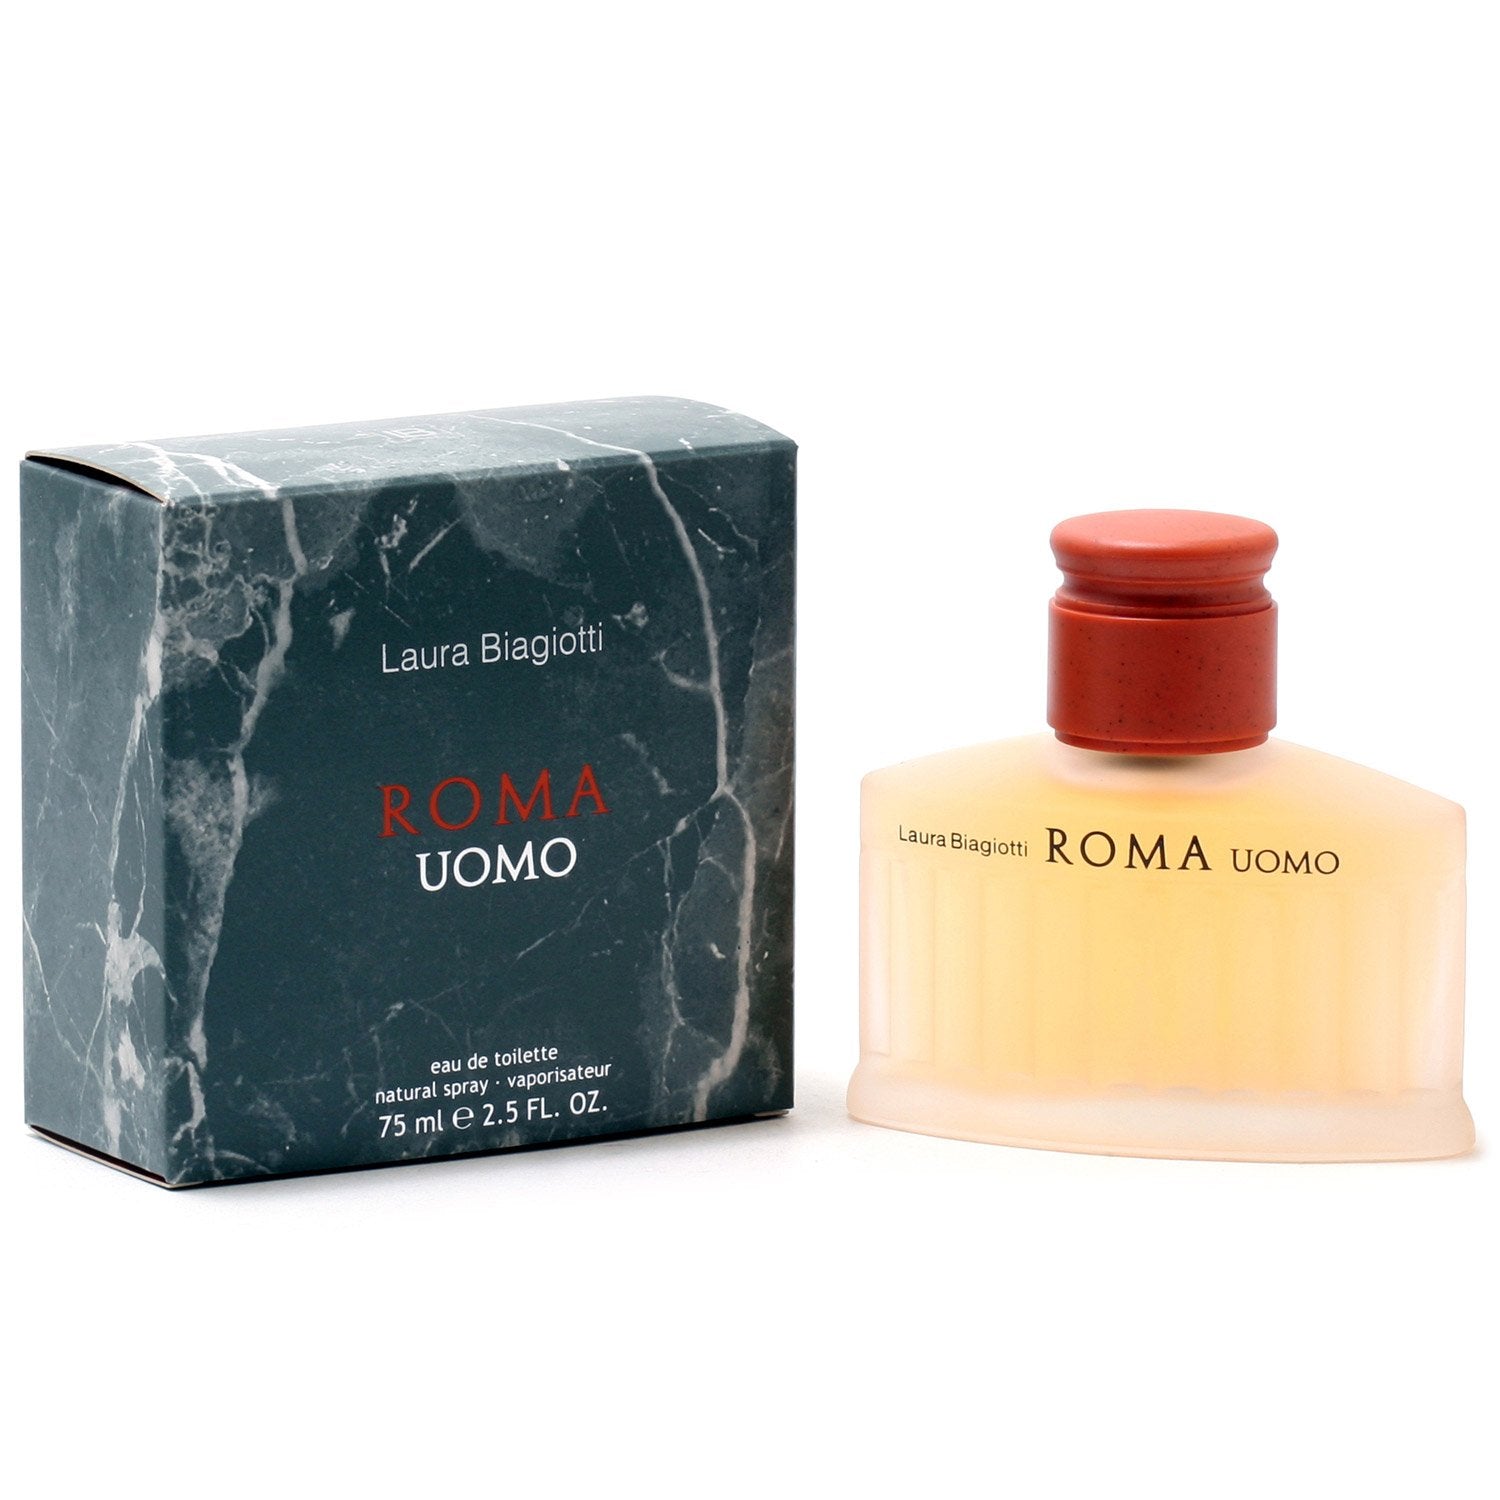 SPRAY, BY DE UOMO ROMA 2.5 – FOR Room MEN Fragrance LAURA - EAU OZ BIAGIOTTI TOILETTE